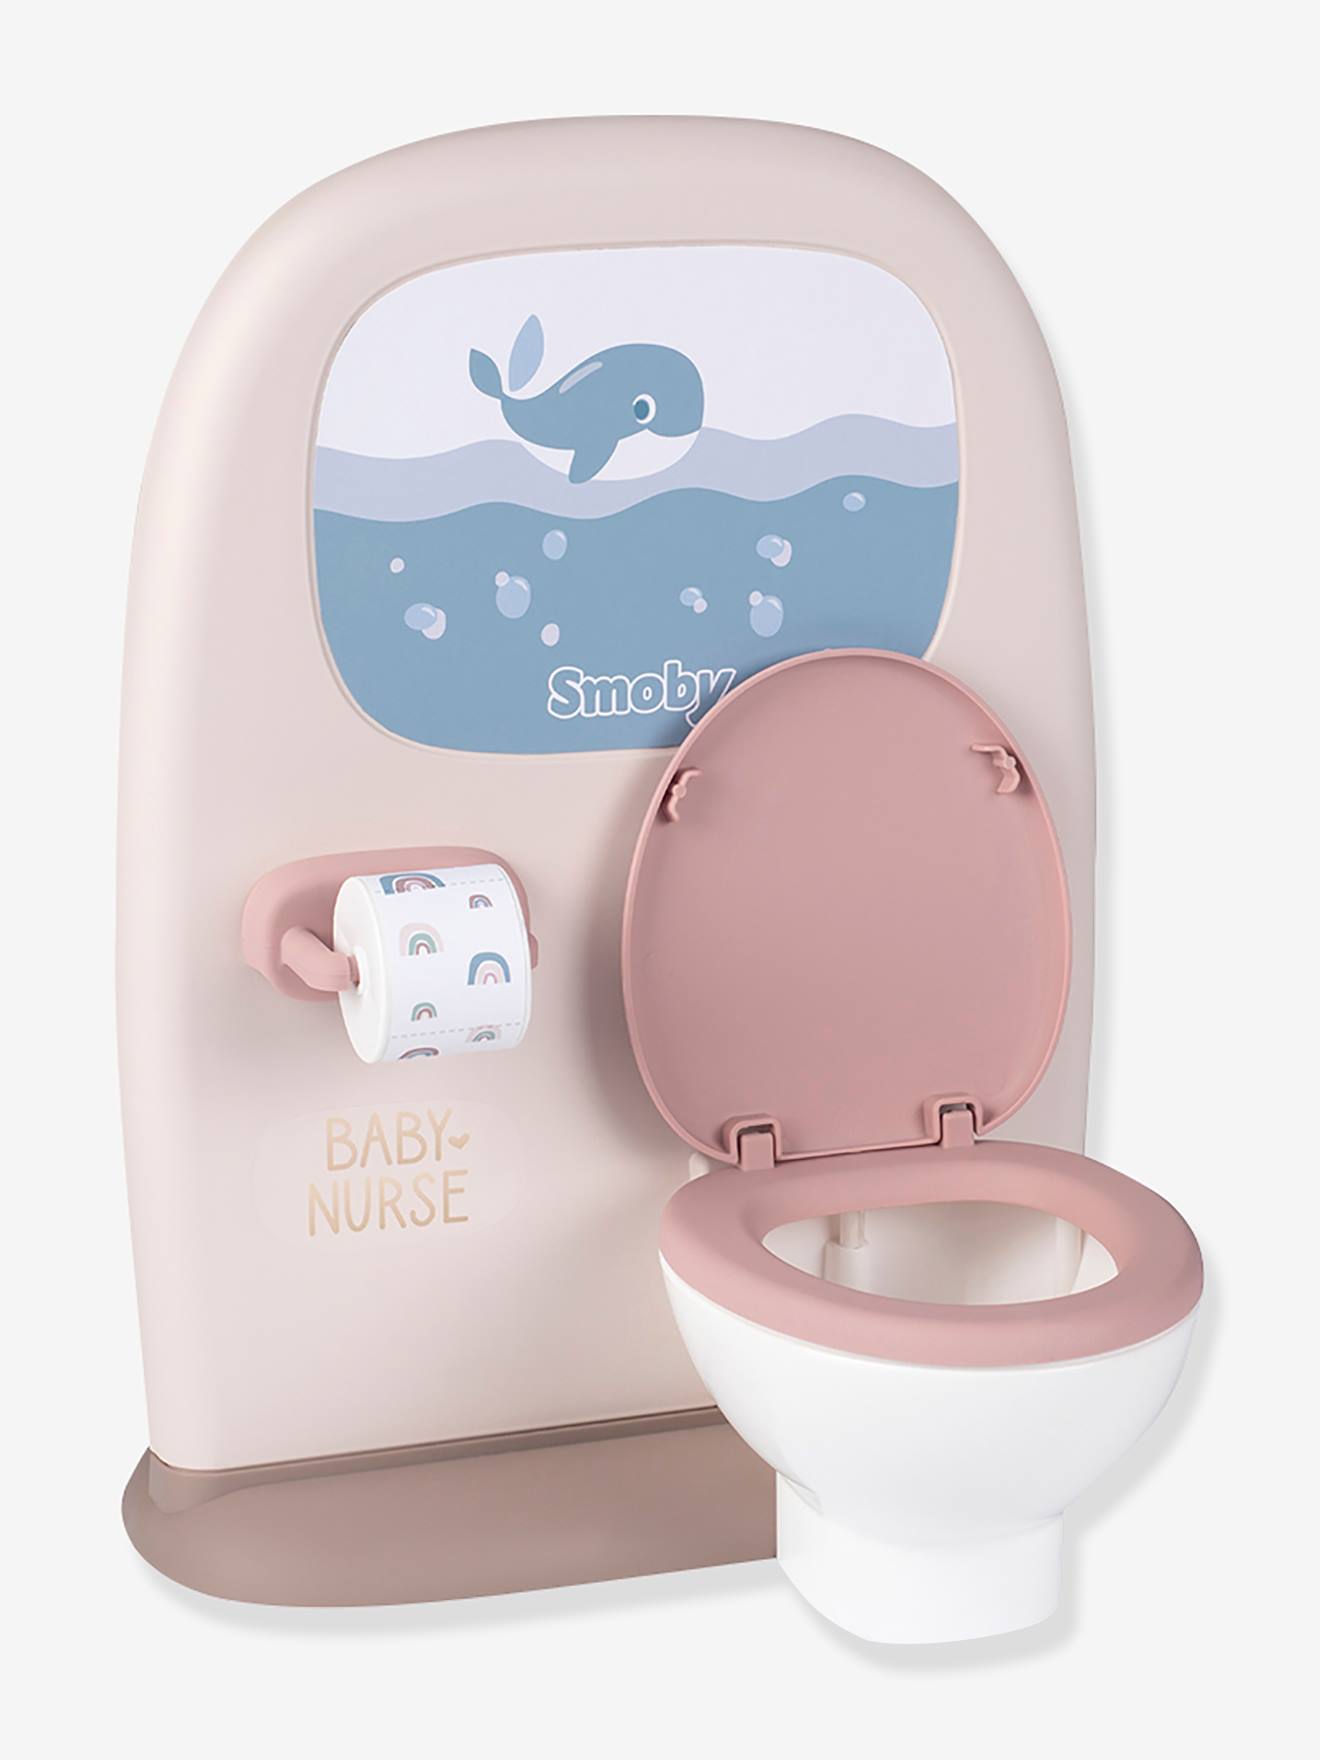 Baby Nurse - Toilettes - SMOBY meerkleurig